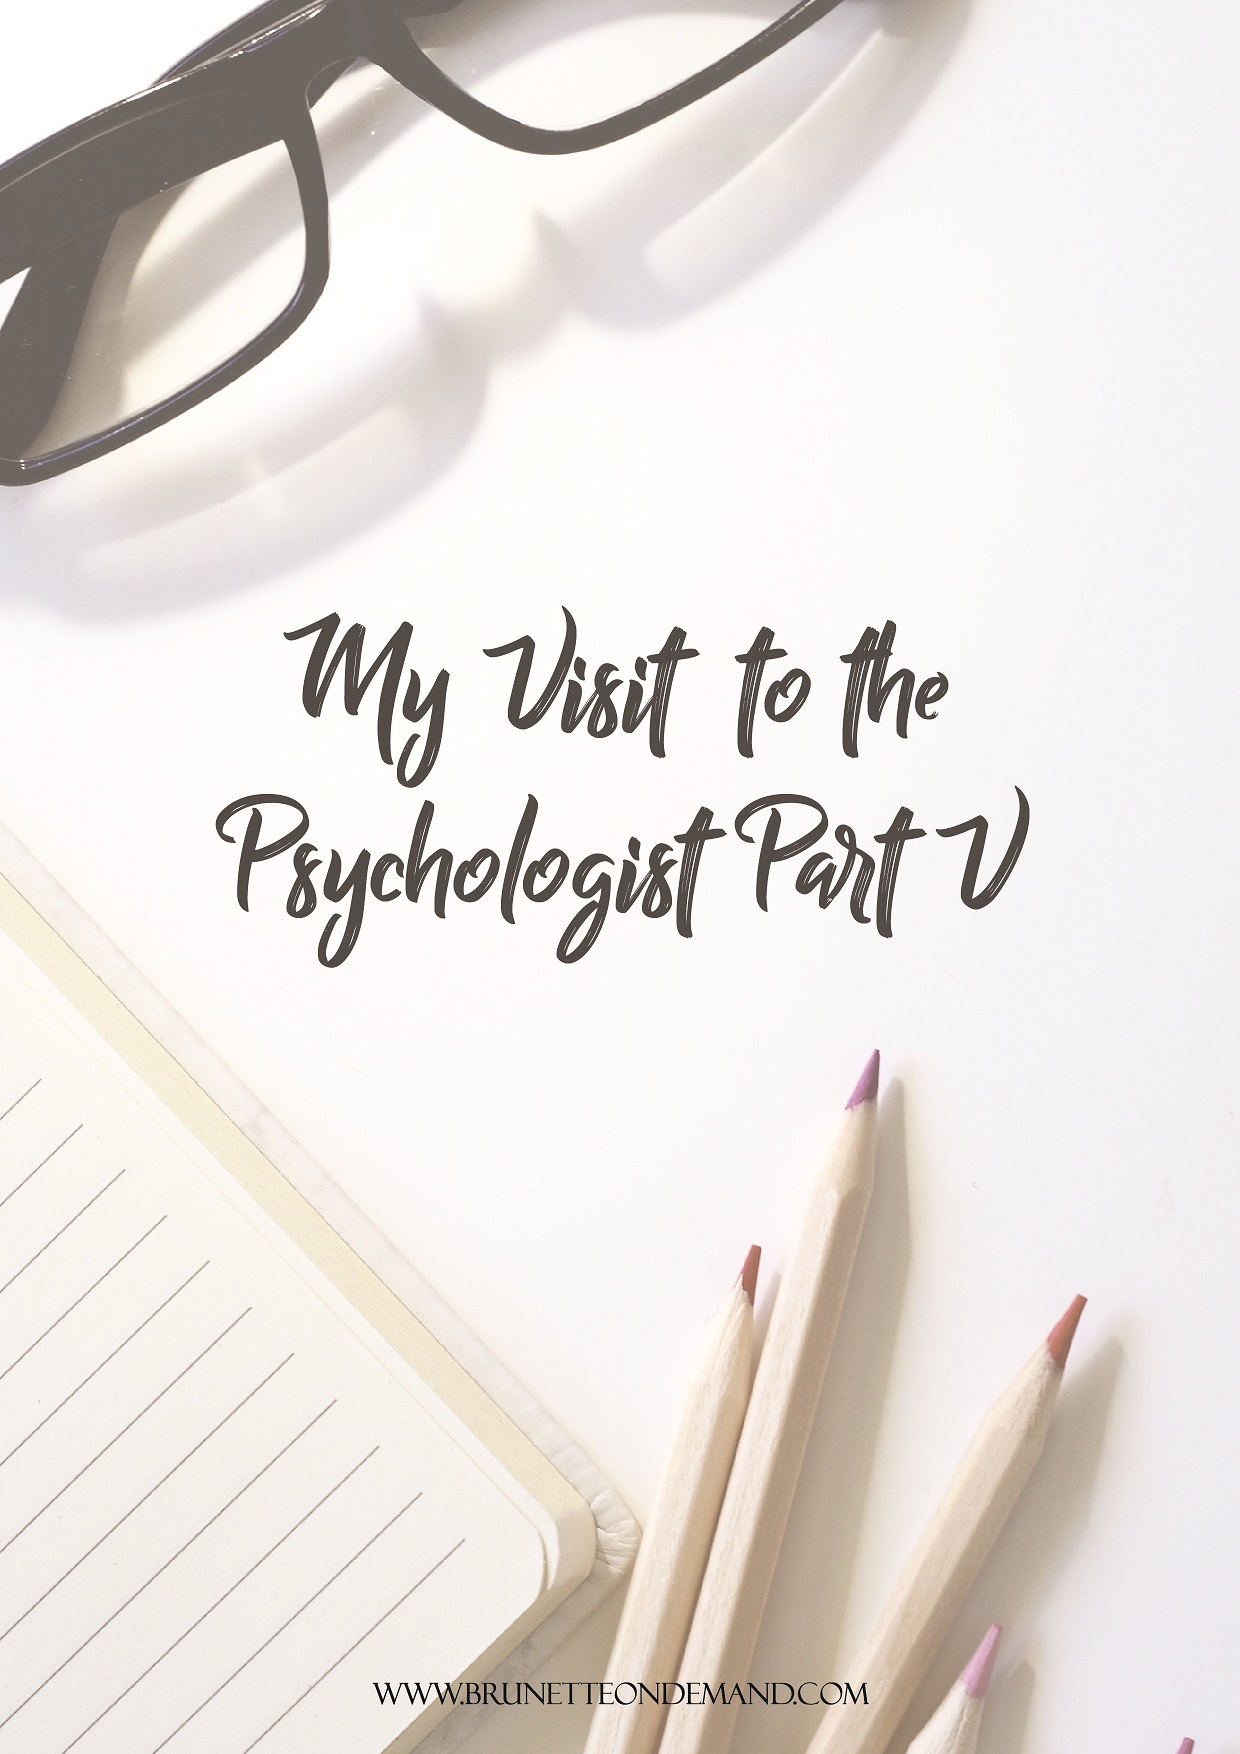 My Visit To The Psychologist Part V